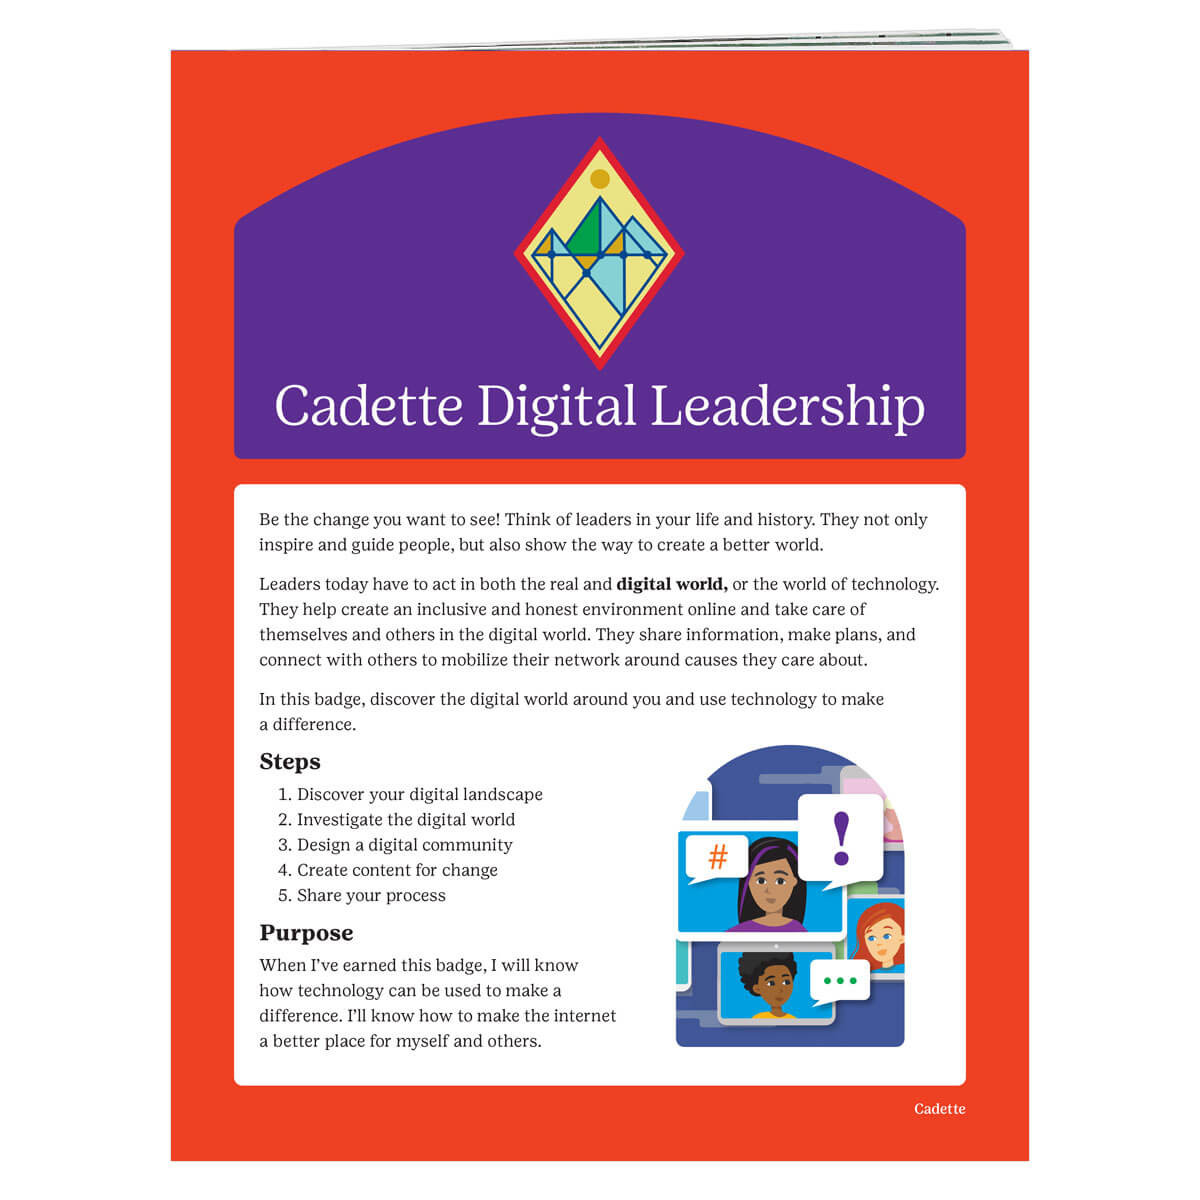 Digital Leadership Badge Requirements